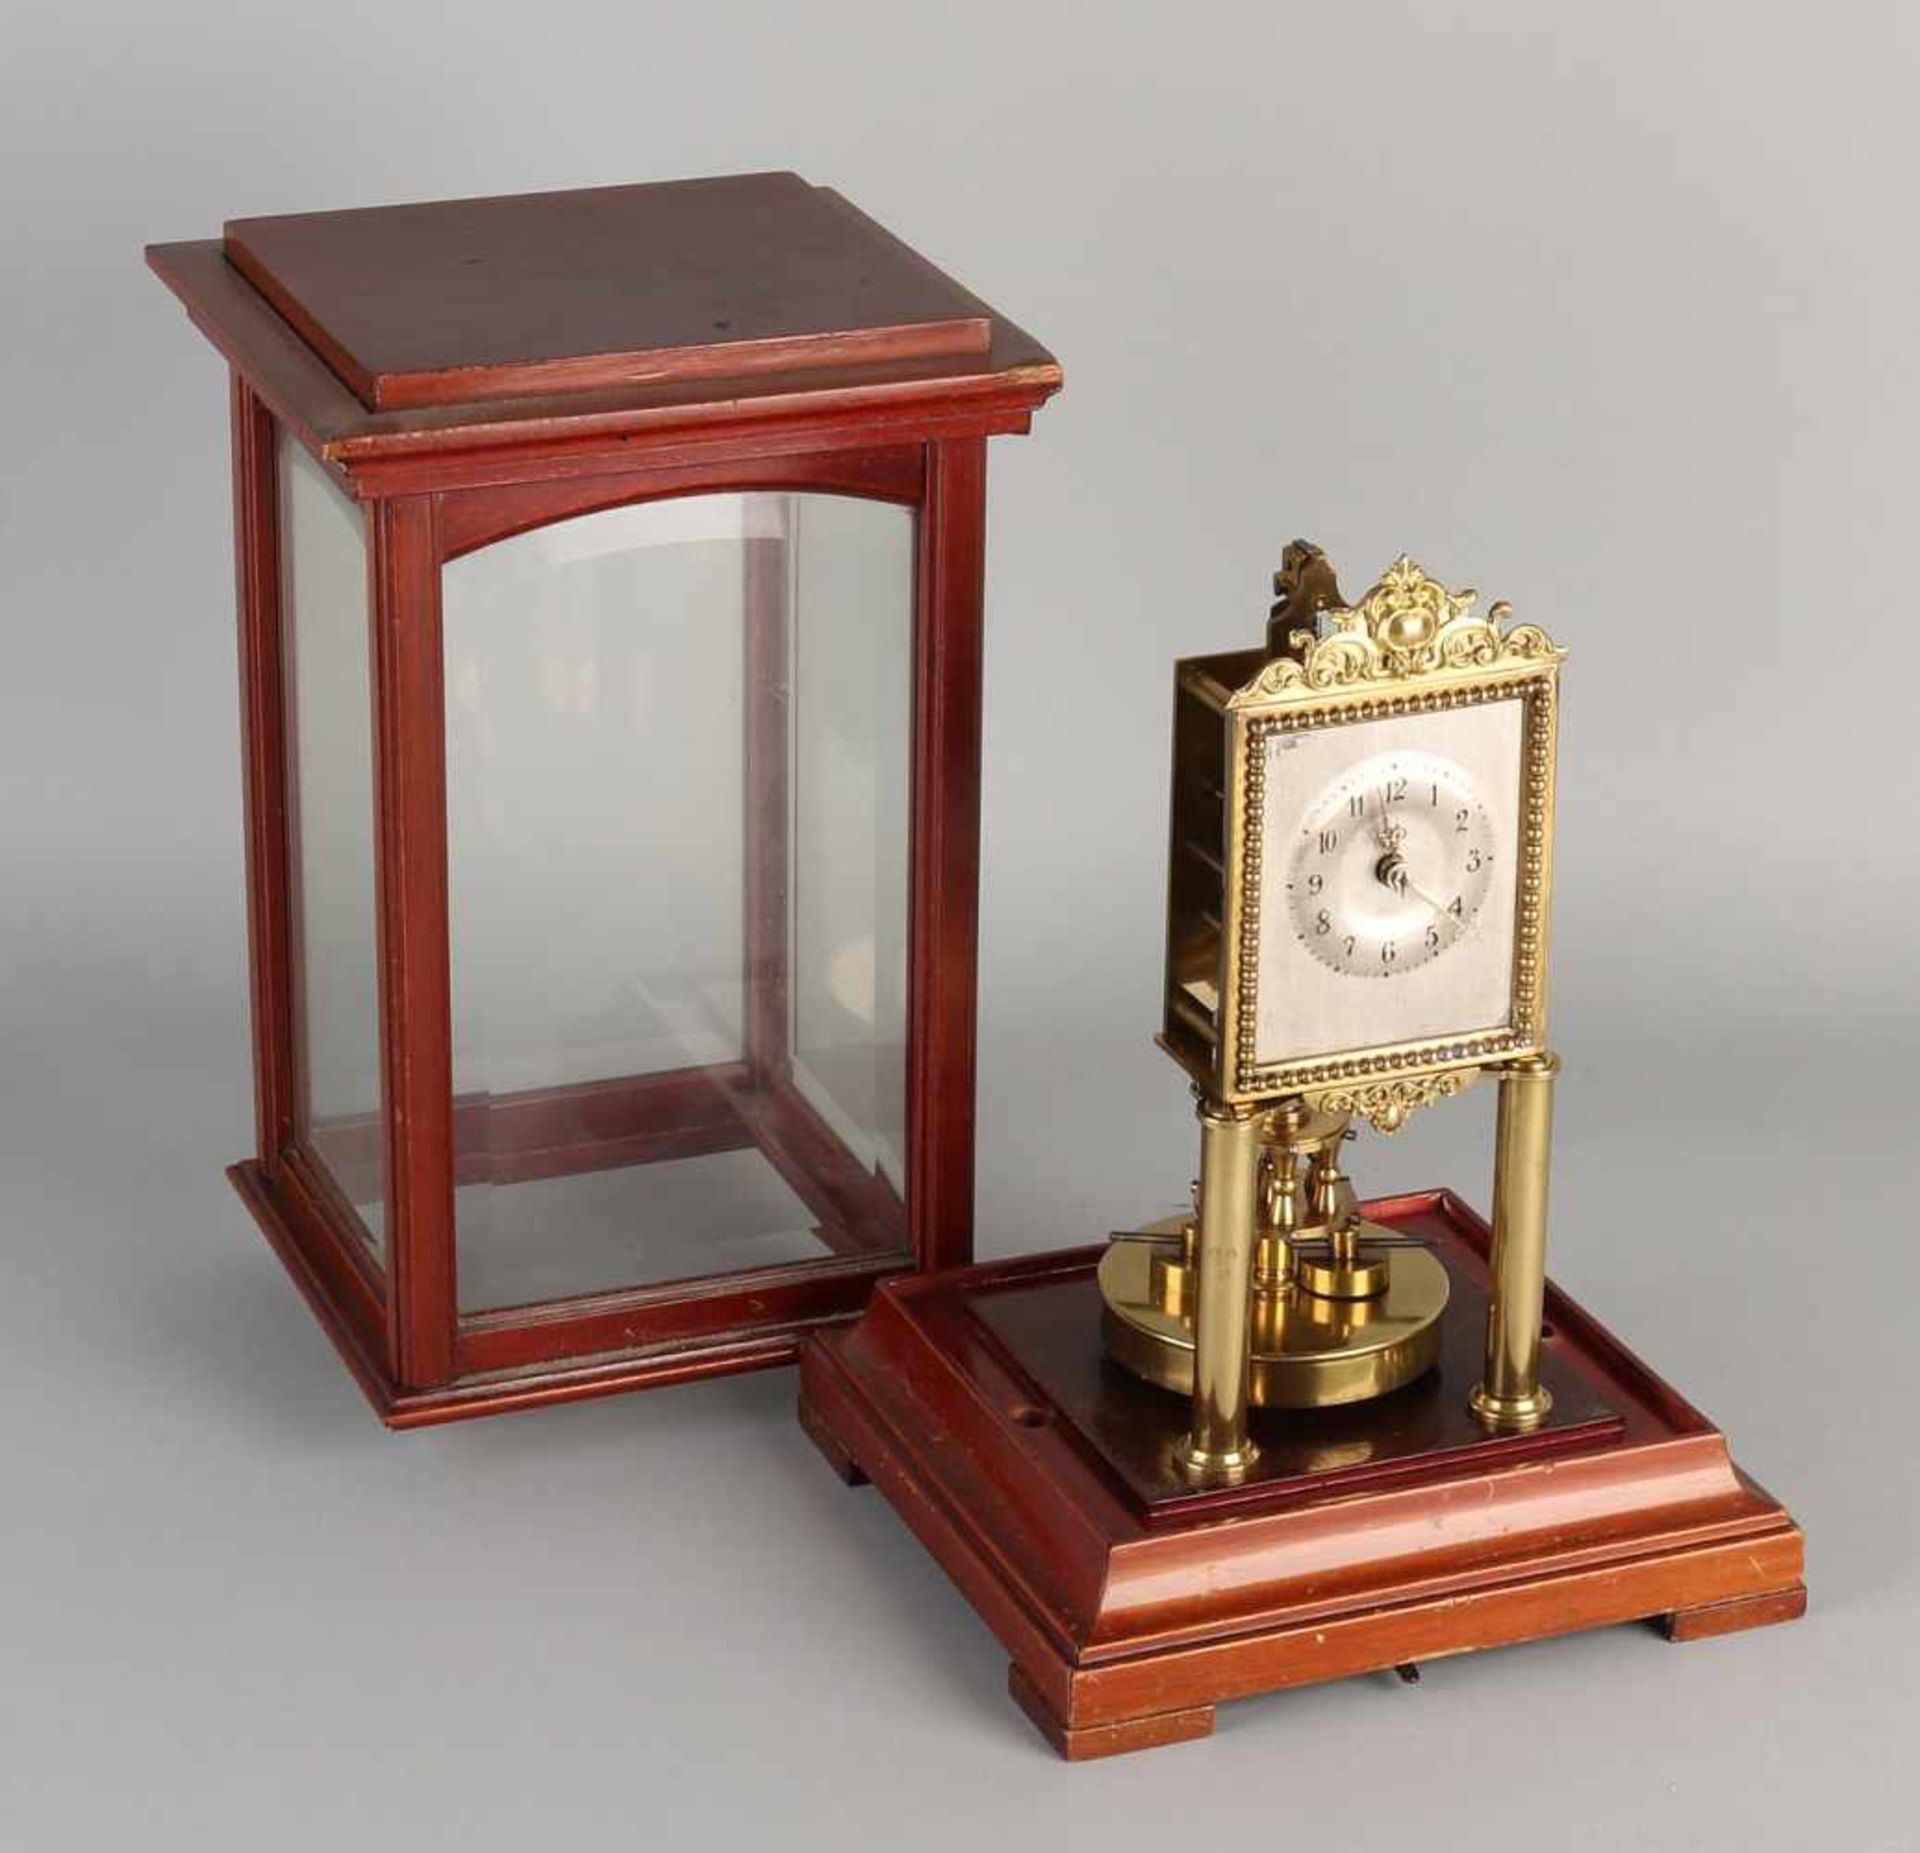 Antique mahogany Gustav Becker years pendulum clock with cut glass. Circa 1900. Dimensions: H 32 cm.